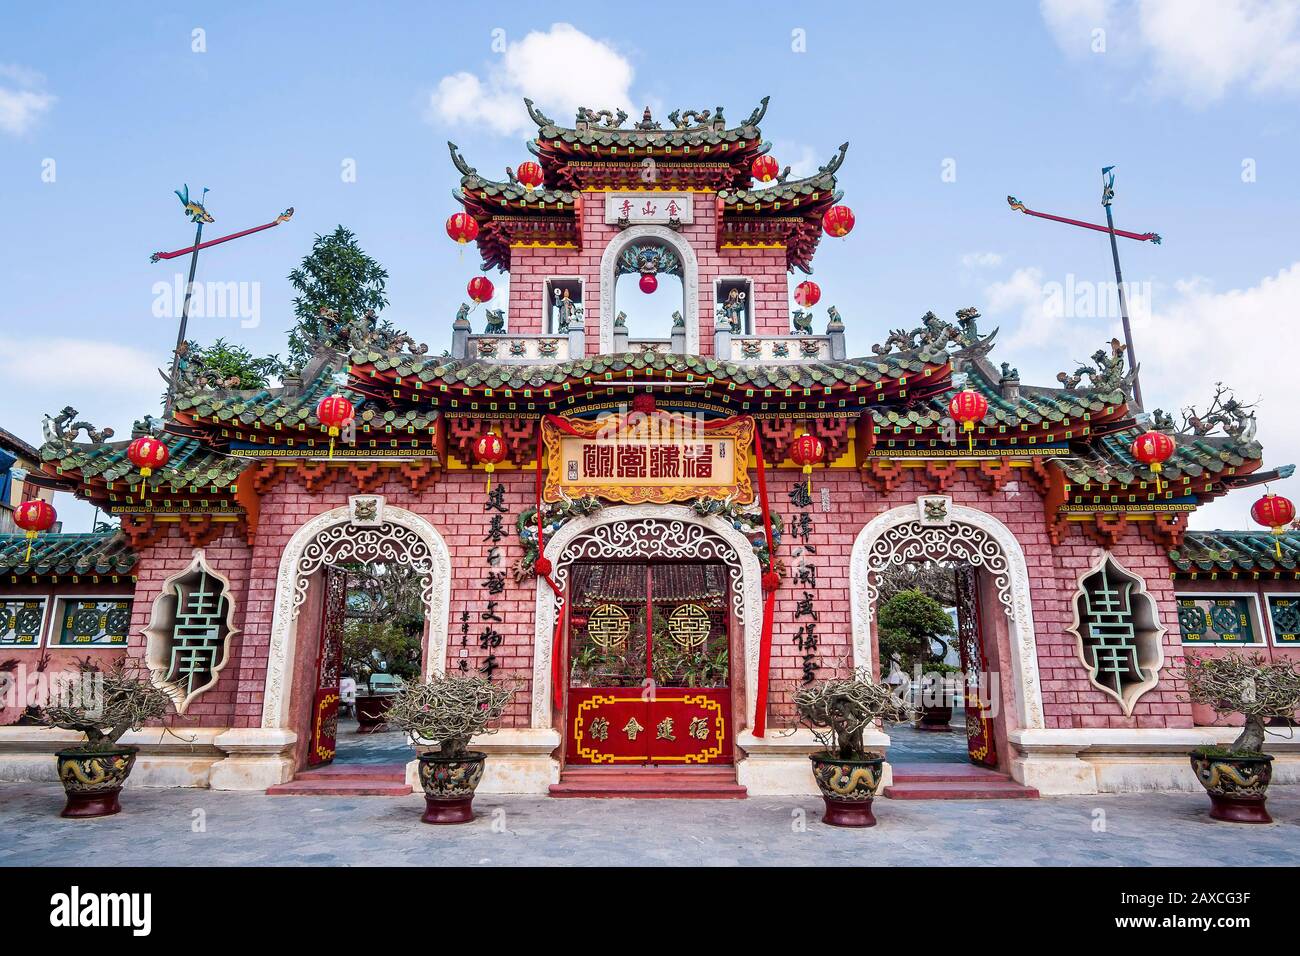 Fujian Assembly Hall (Phuc Kien), built around 1690 in Hoi An Ancient Town, Vietnam. Stock Photo